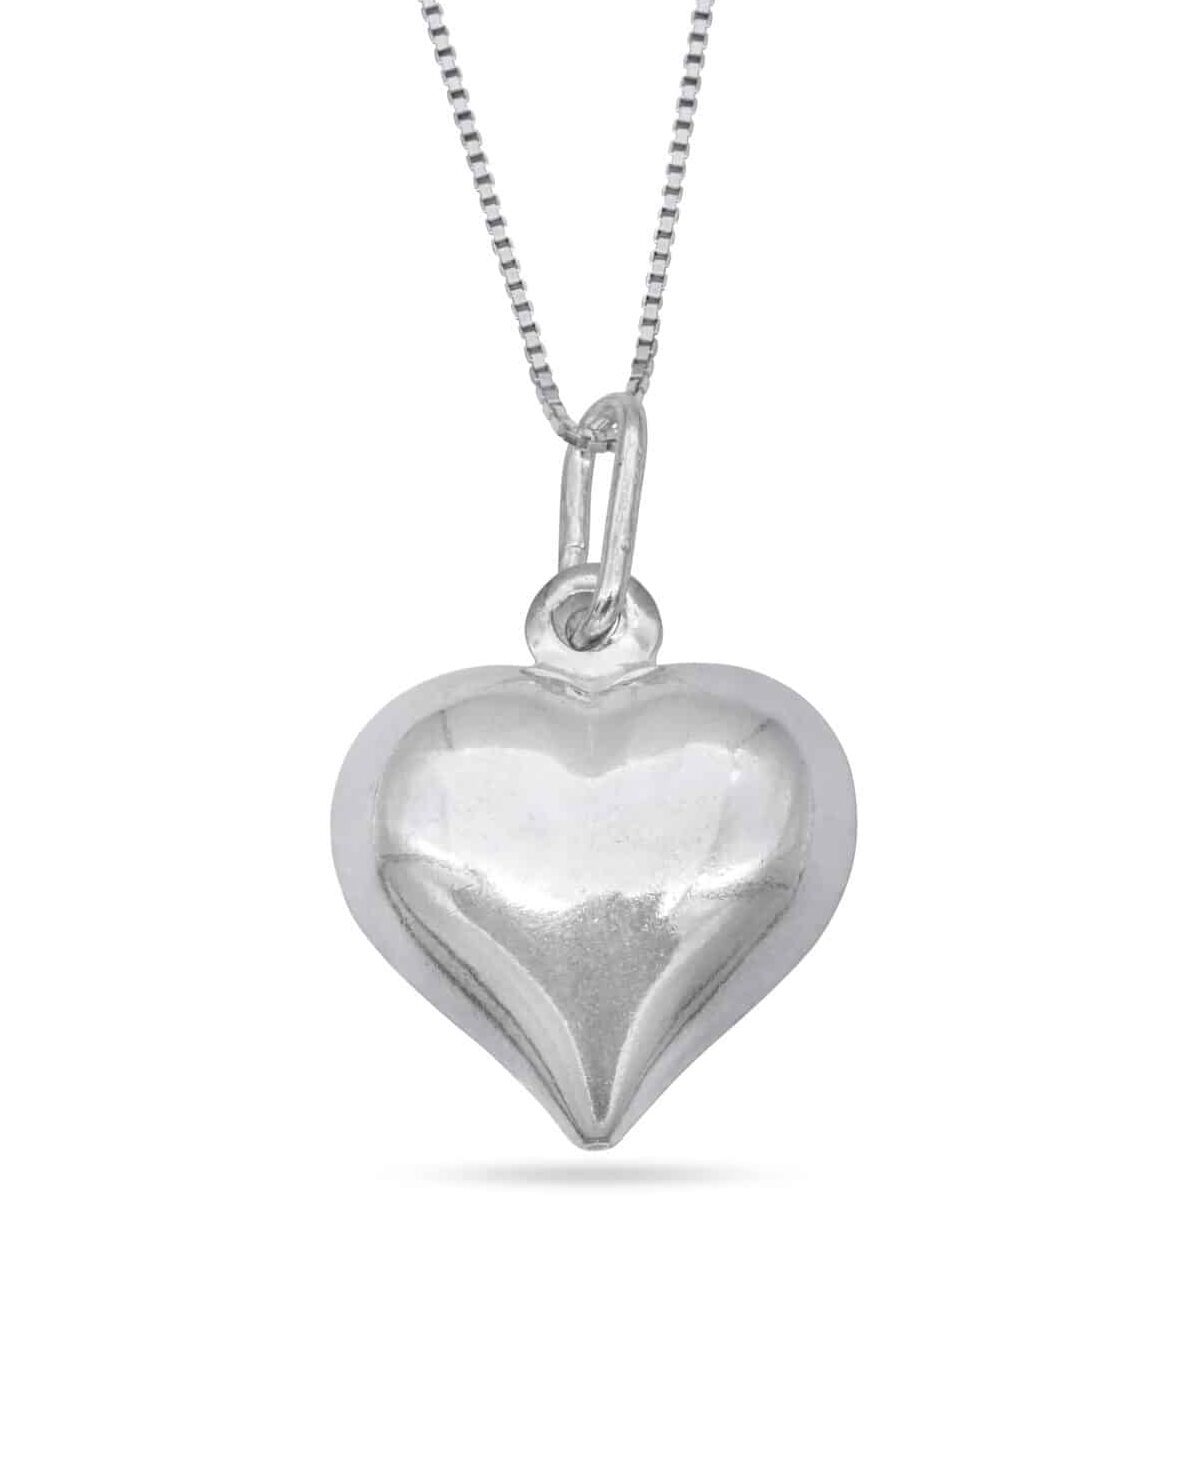 Big Sterling Silver Heart Pendant